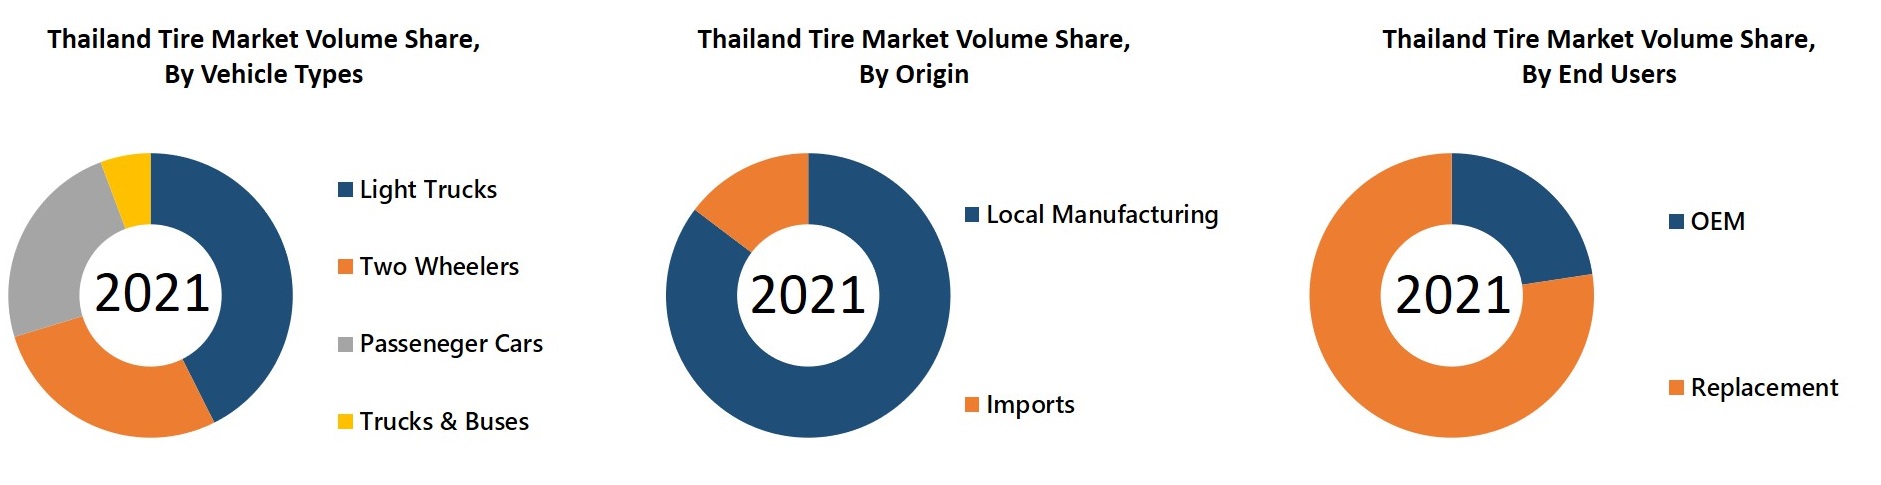 Thailand Tire Market Revenue Share